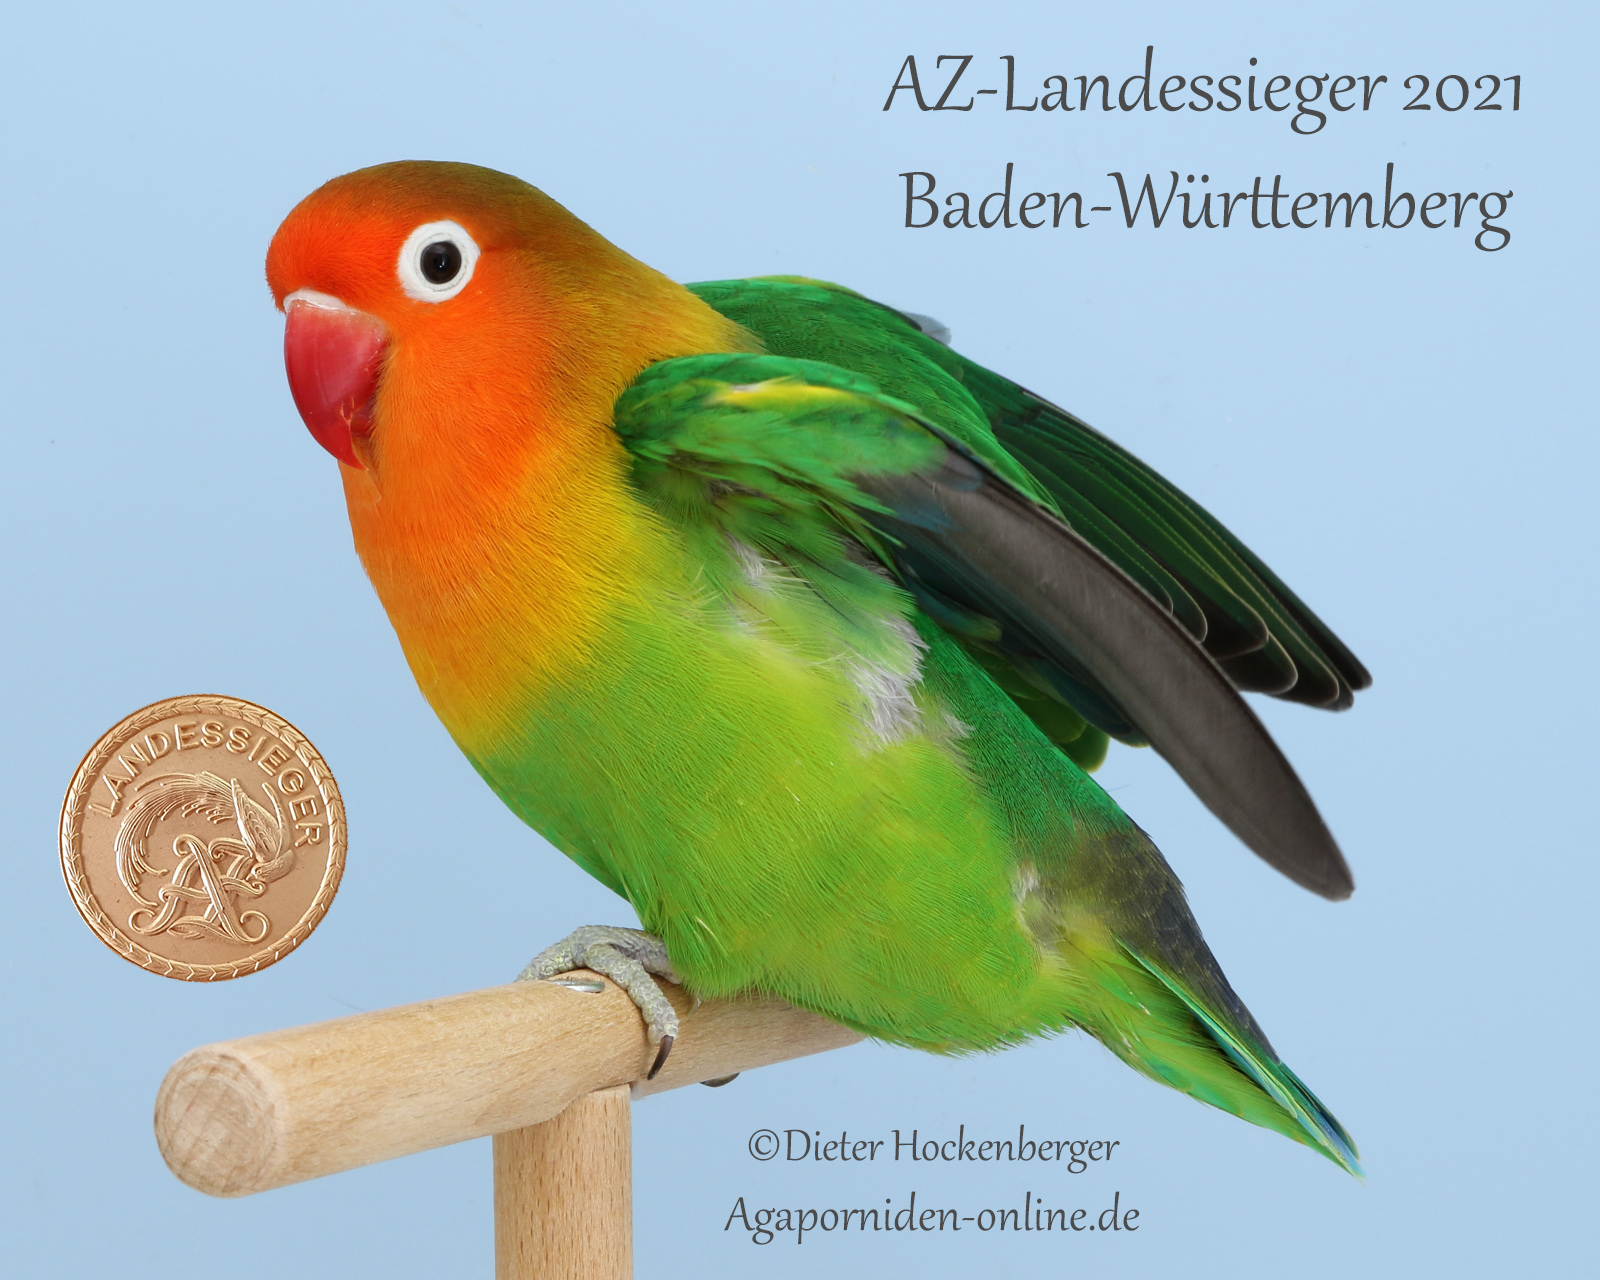 AZ-Landessieger Baden-Württemberg 2021